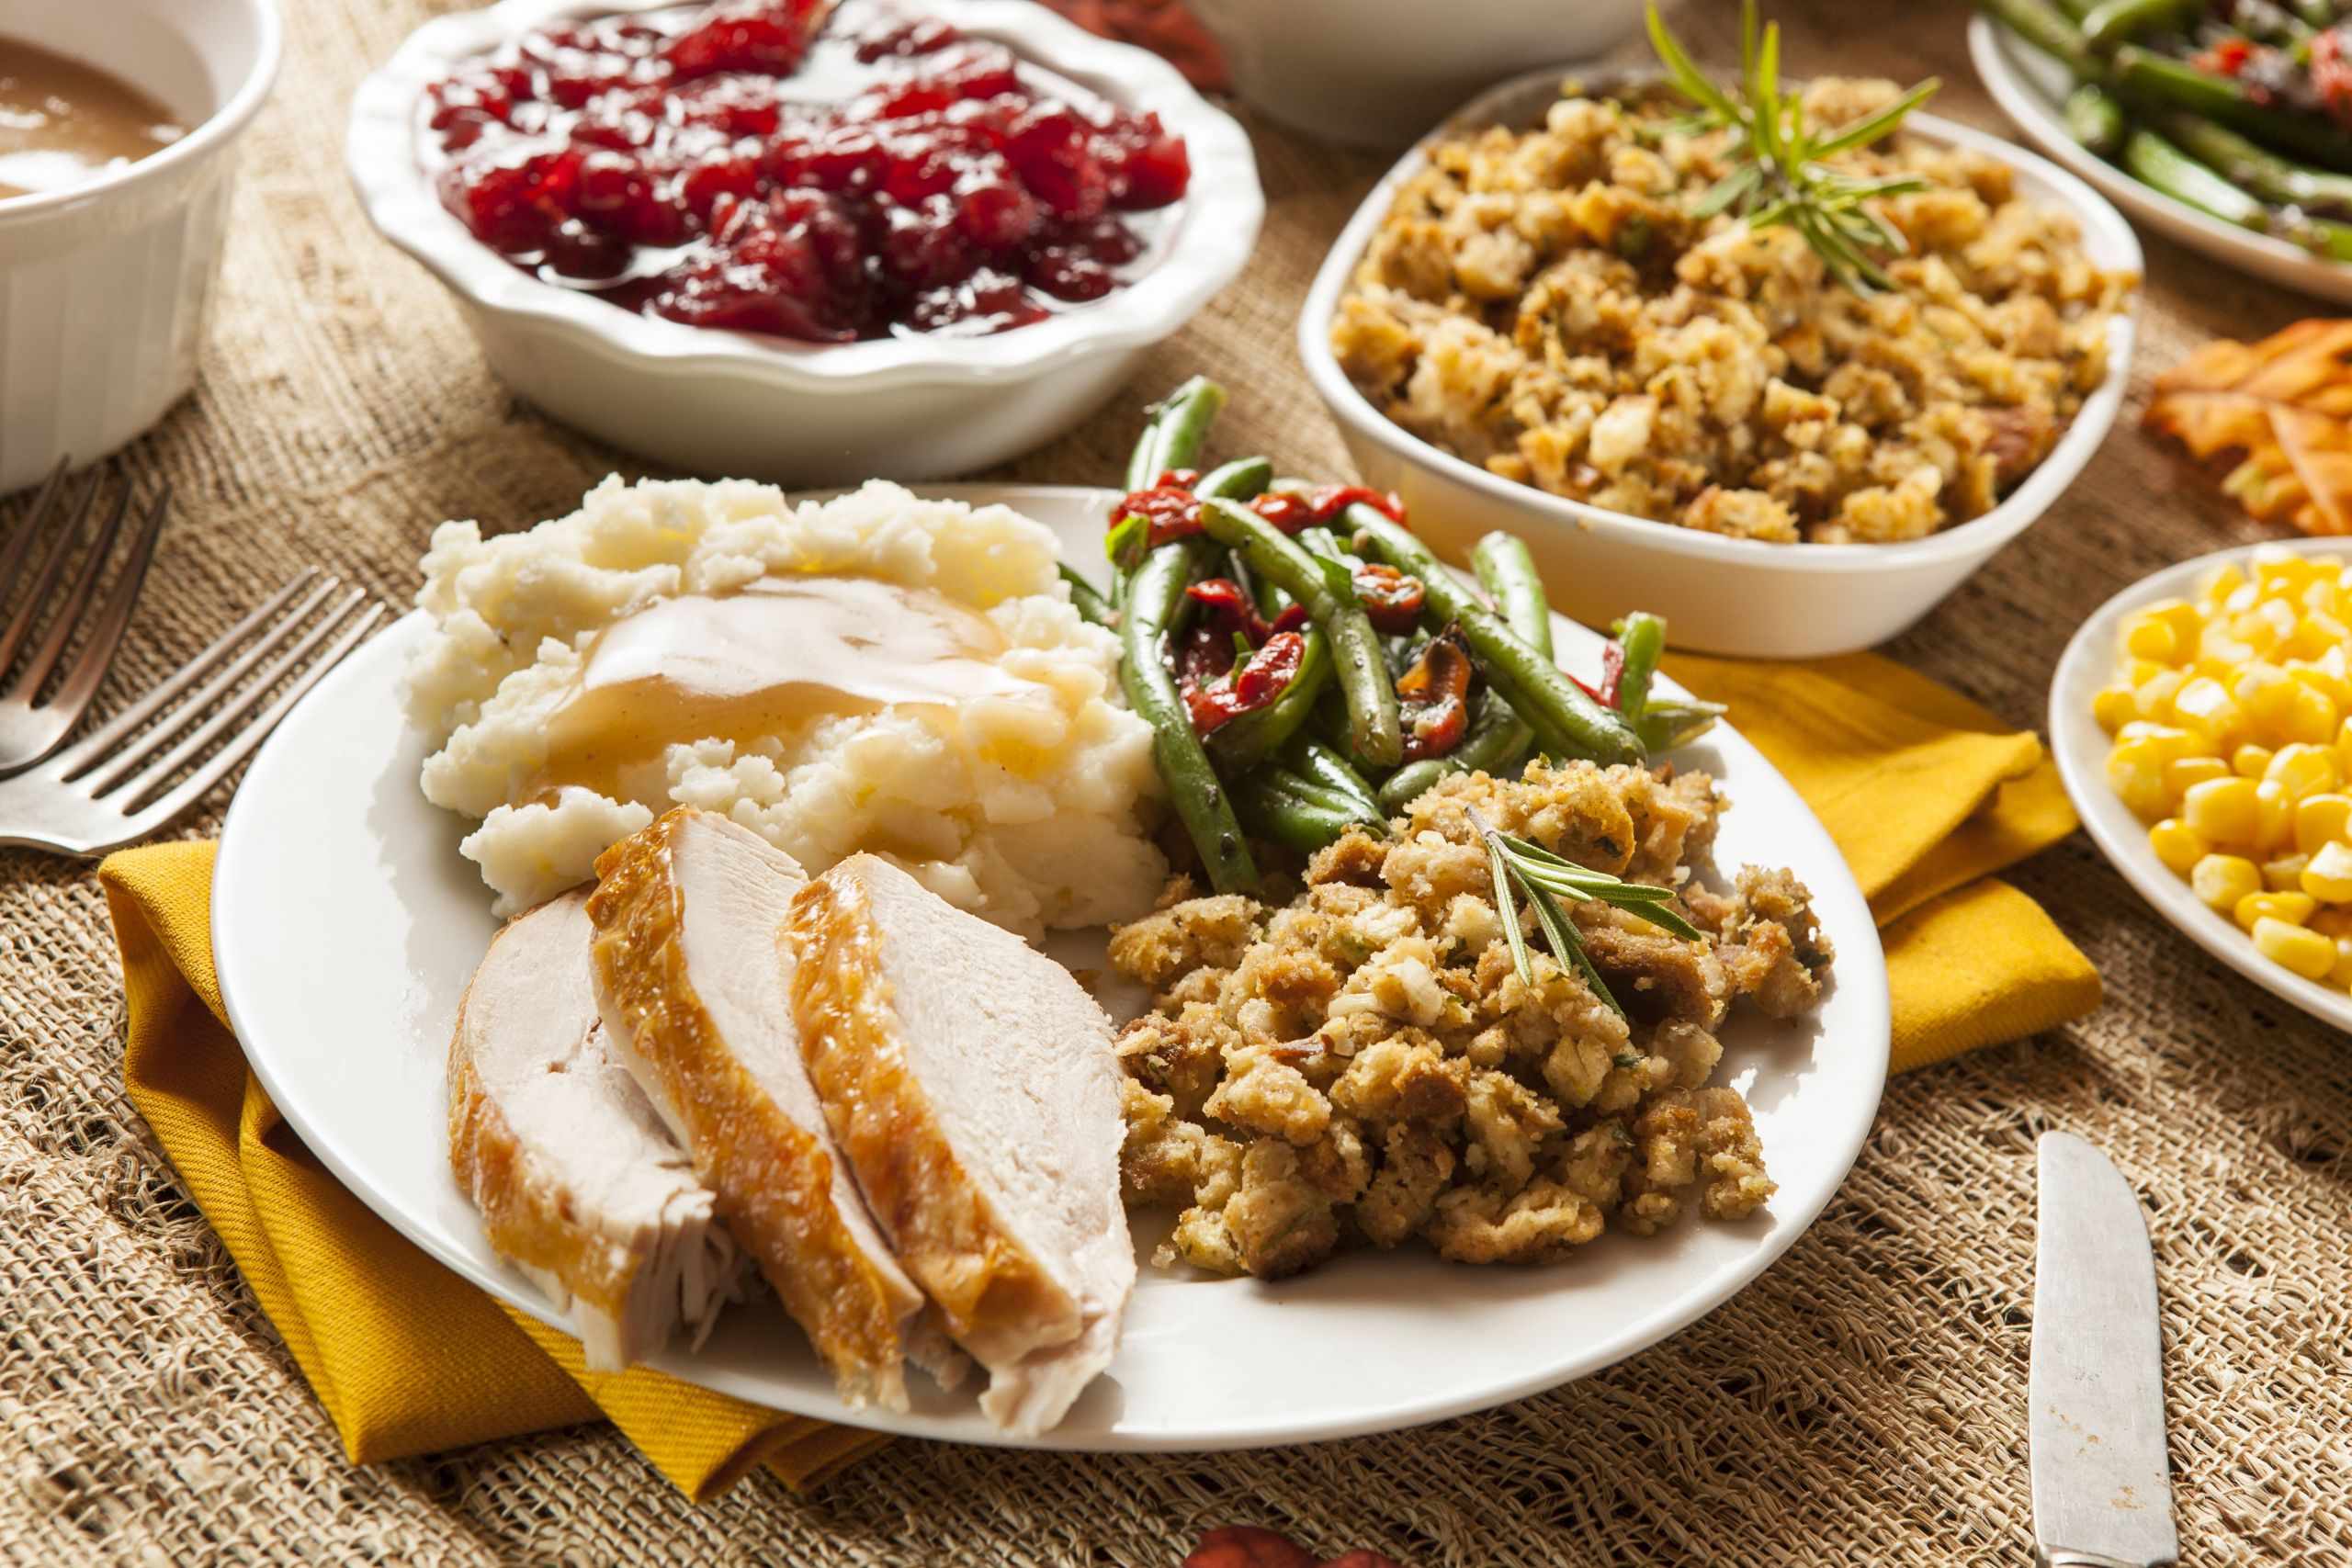 Thanksgiving Dinner Ideas
 THANKSGIVING MENU IDEAS